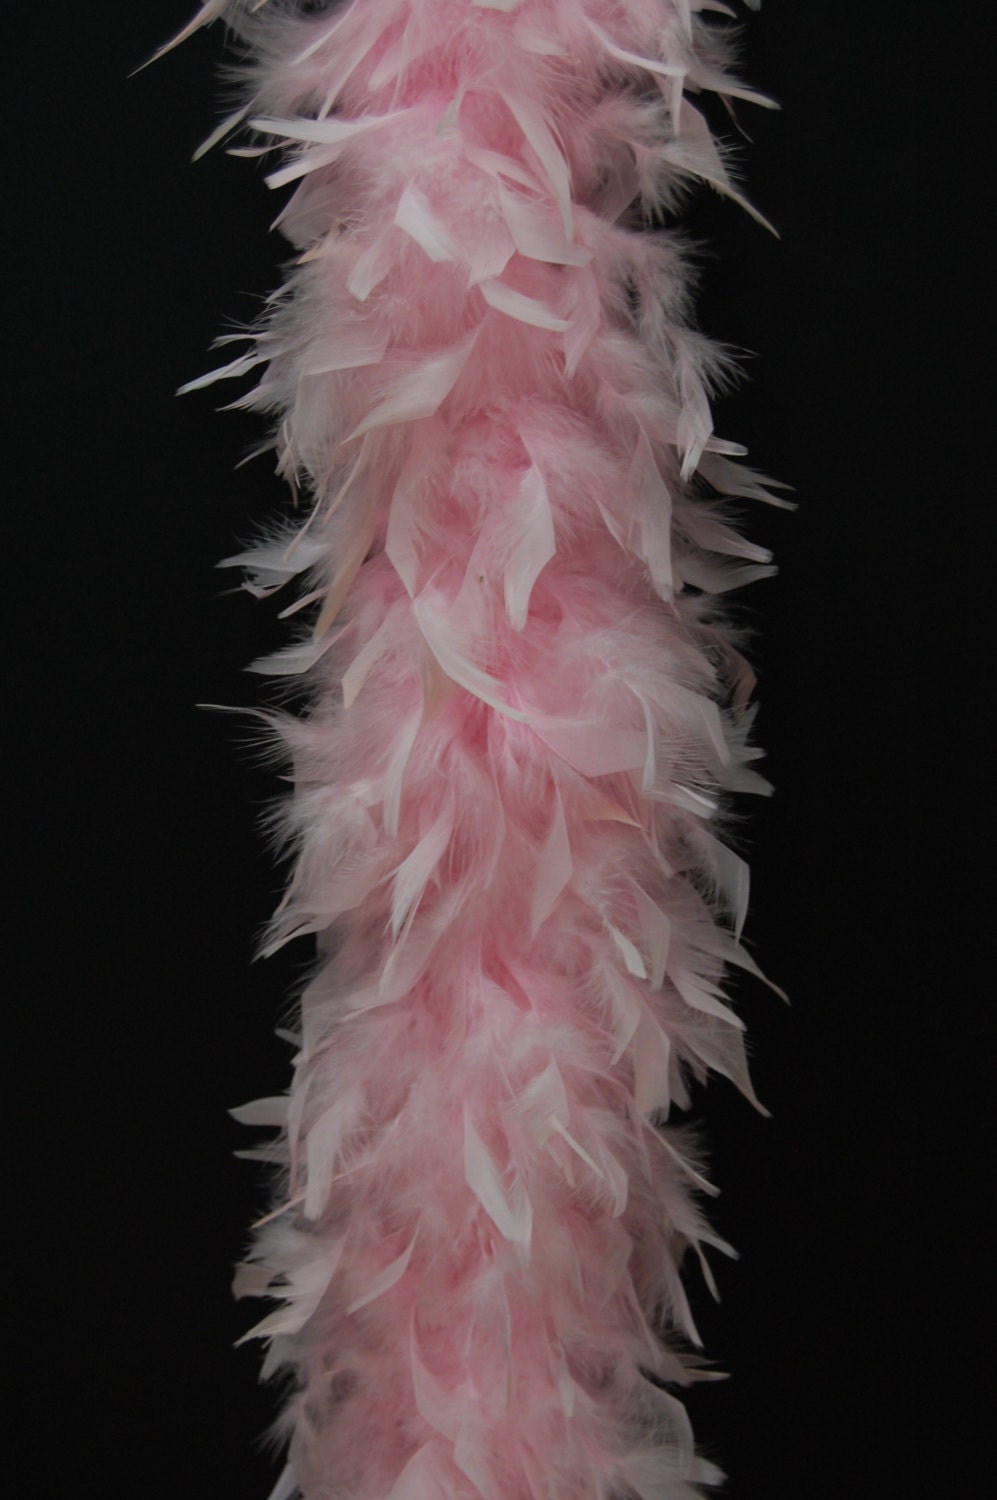 EQWLJWE 40g Turkey Feathers Hat With Feathers Boa Novelty Pink